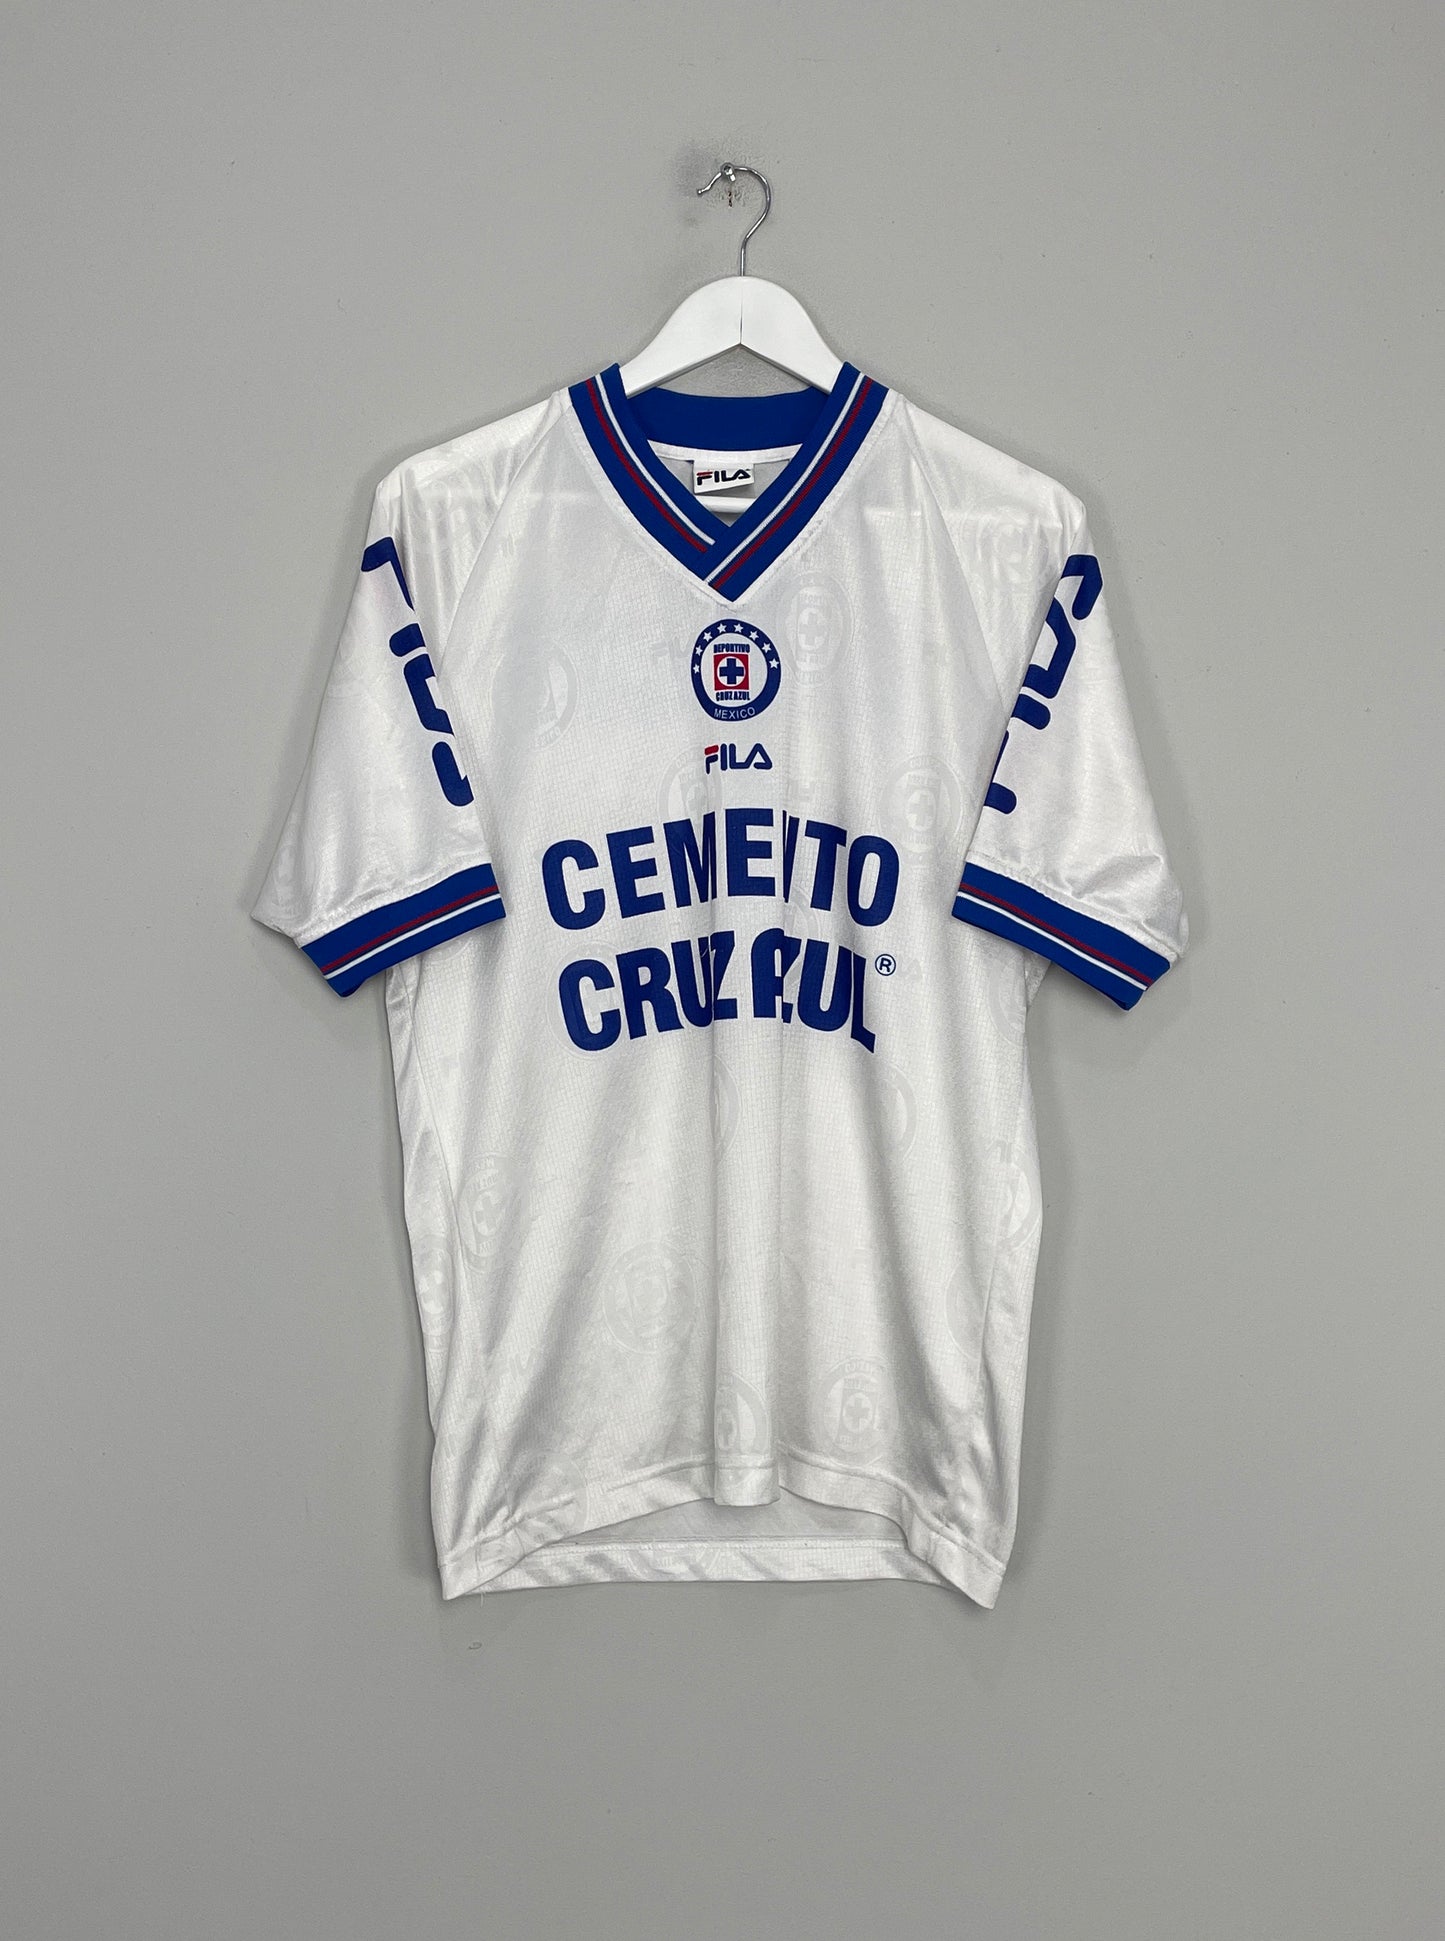 Image of the Cruz Azul shirt from the 1997/98 season